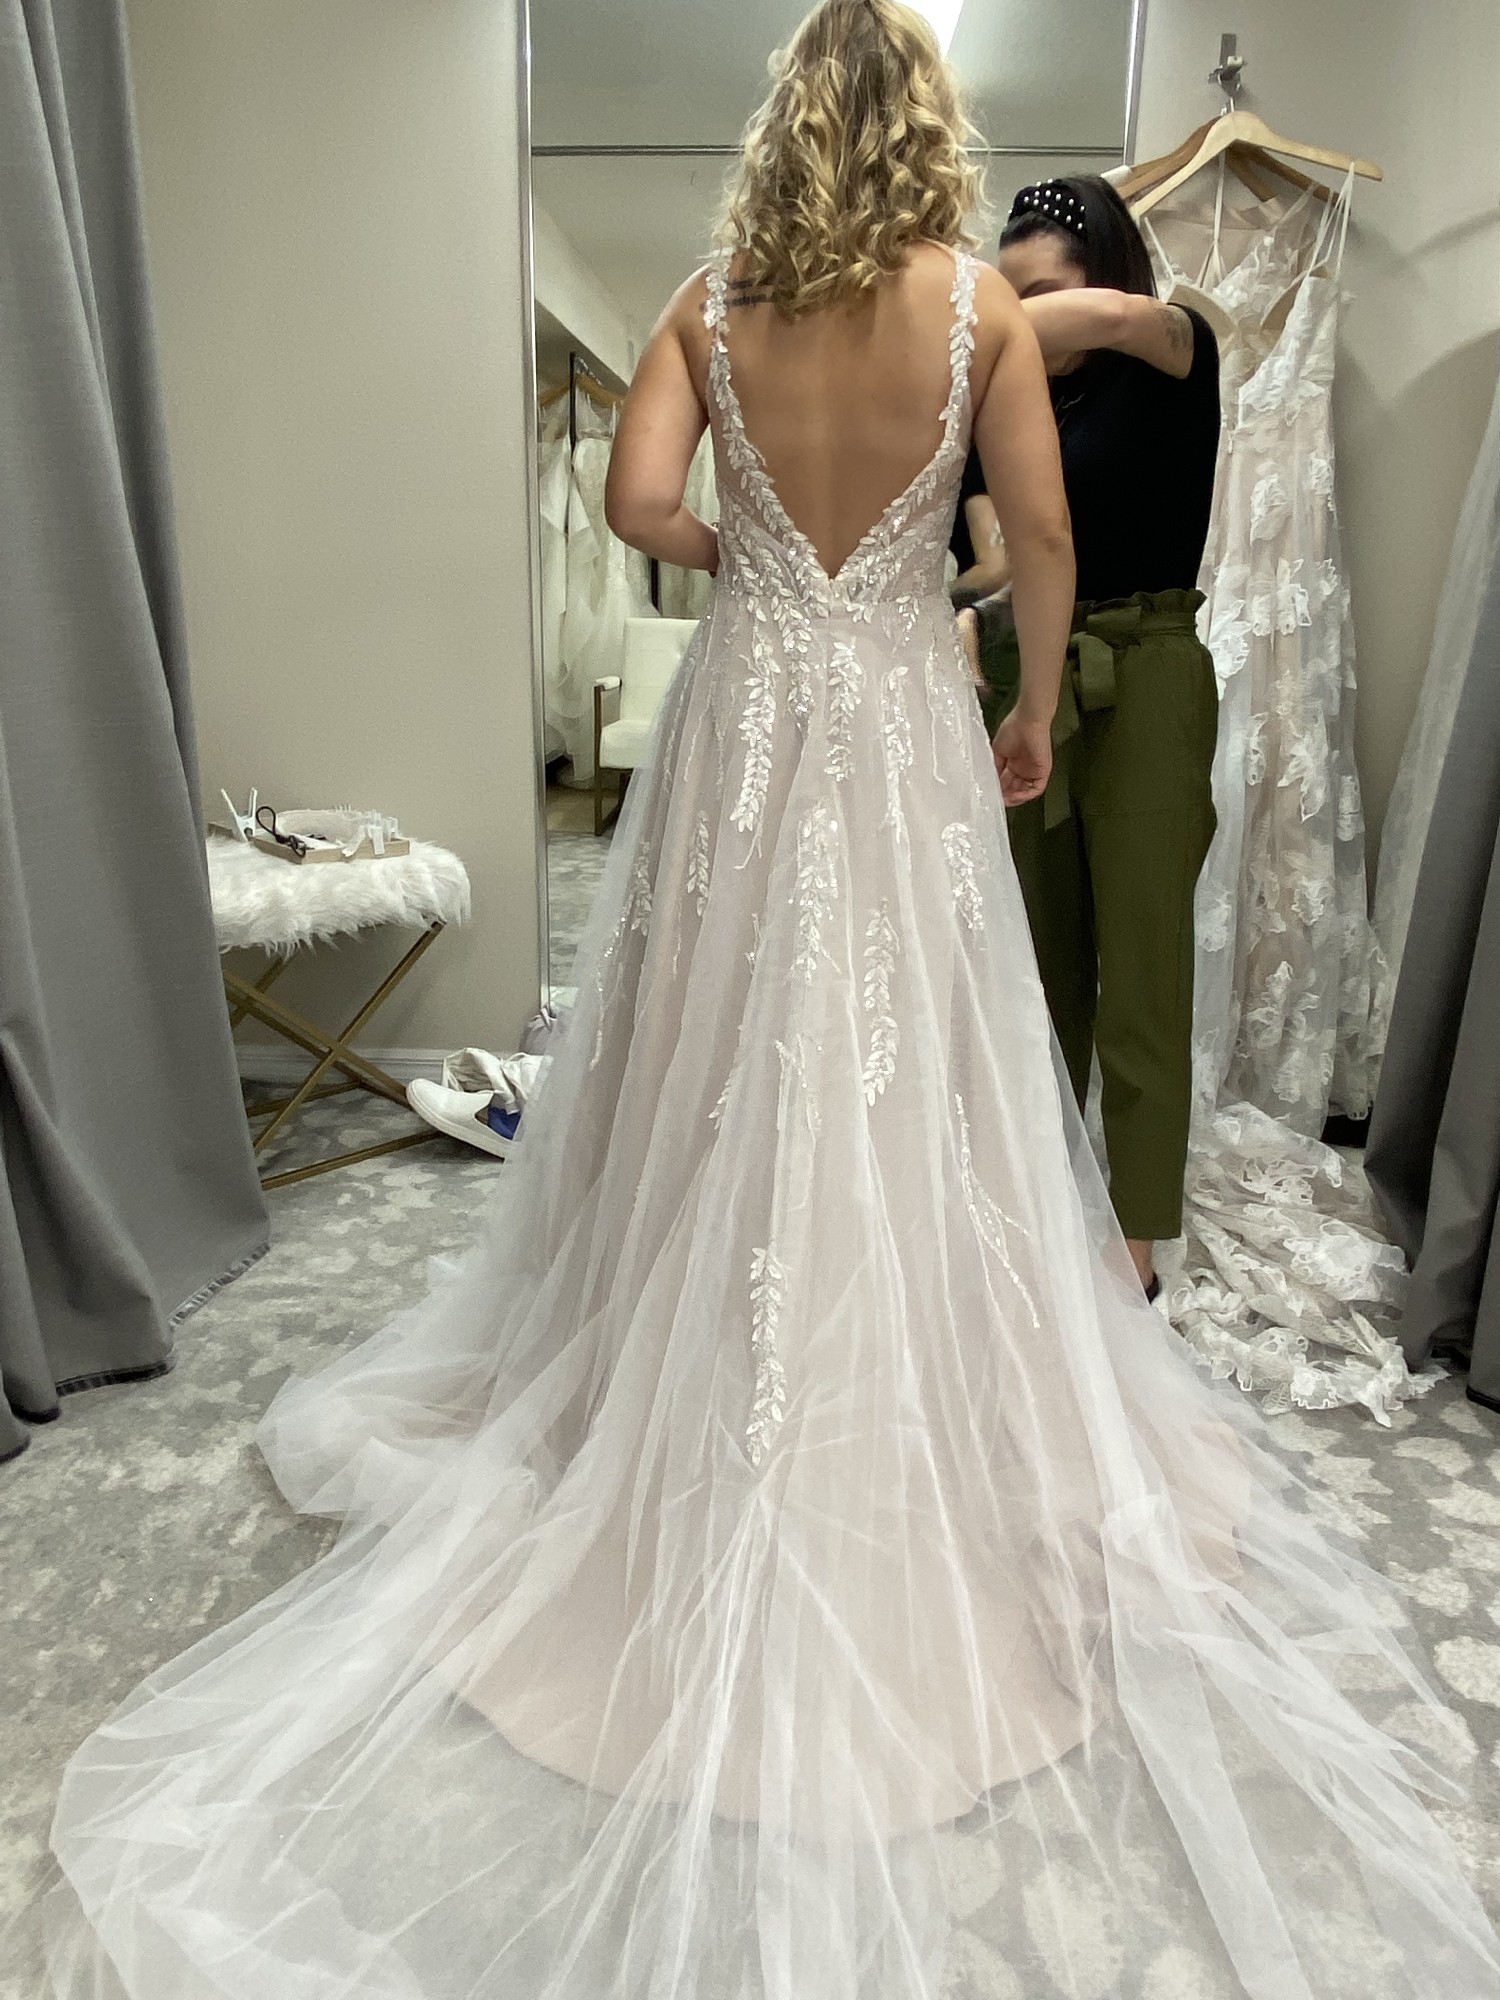 Madi Lane Blaise New Wedding Dress Save 45% - Stillwhite